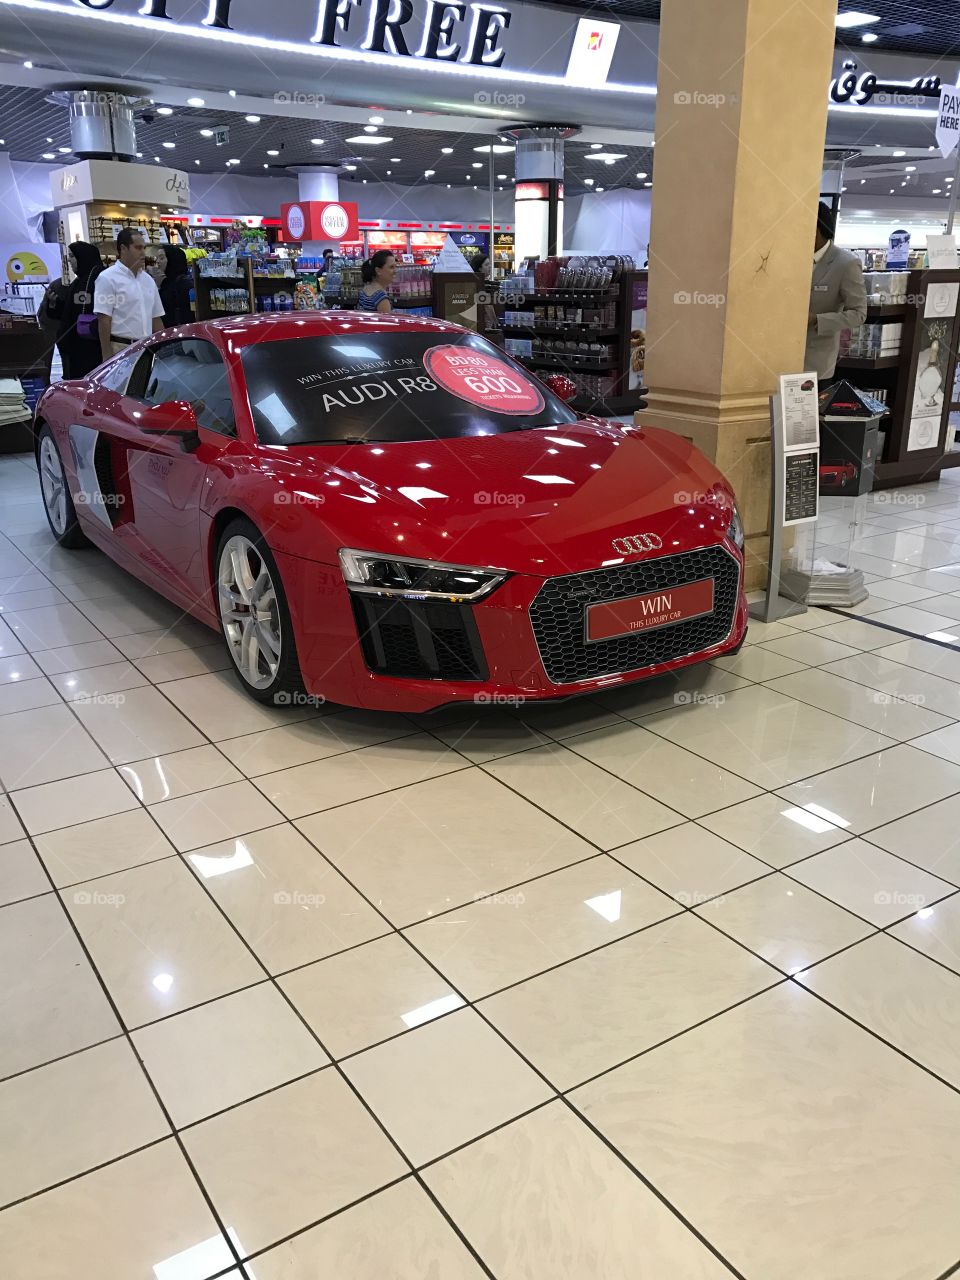 Audi R8 promotion at Kuwait airport. . .